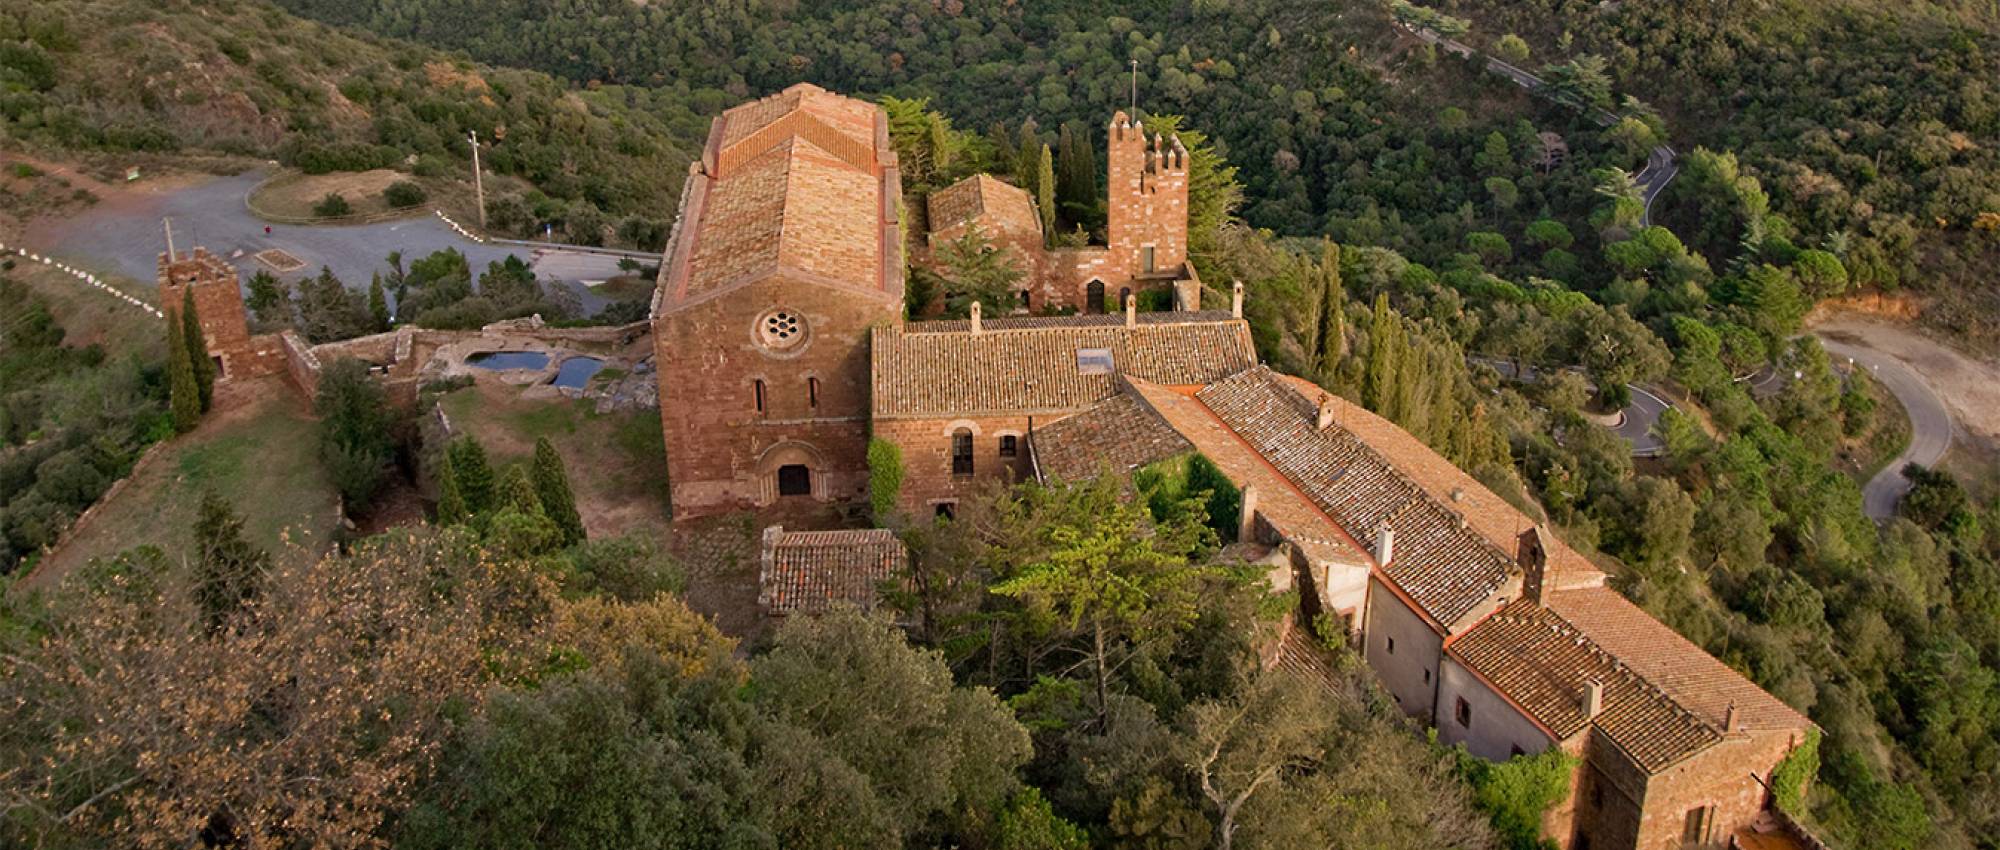 Vista aèria del Castell Monestir d'Escornalbou. SBA73 / Wikimedia Commons. CC BY-SA 2.0